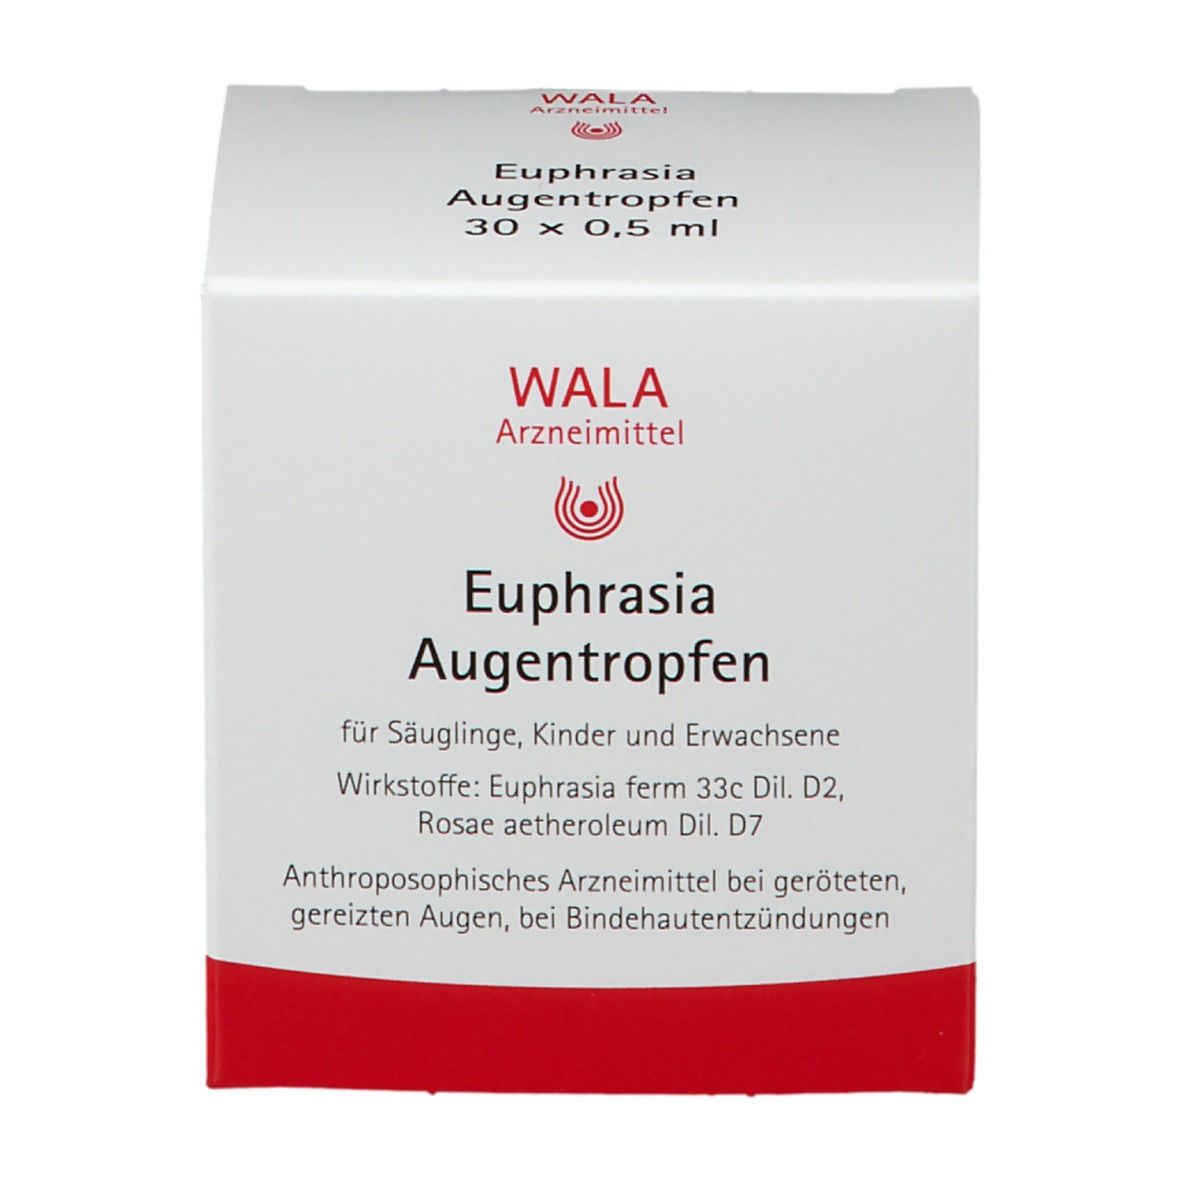 WALA® Euphrasia Augentropfen